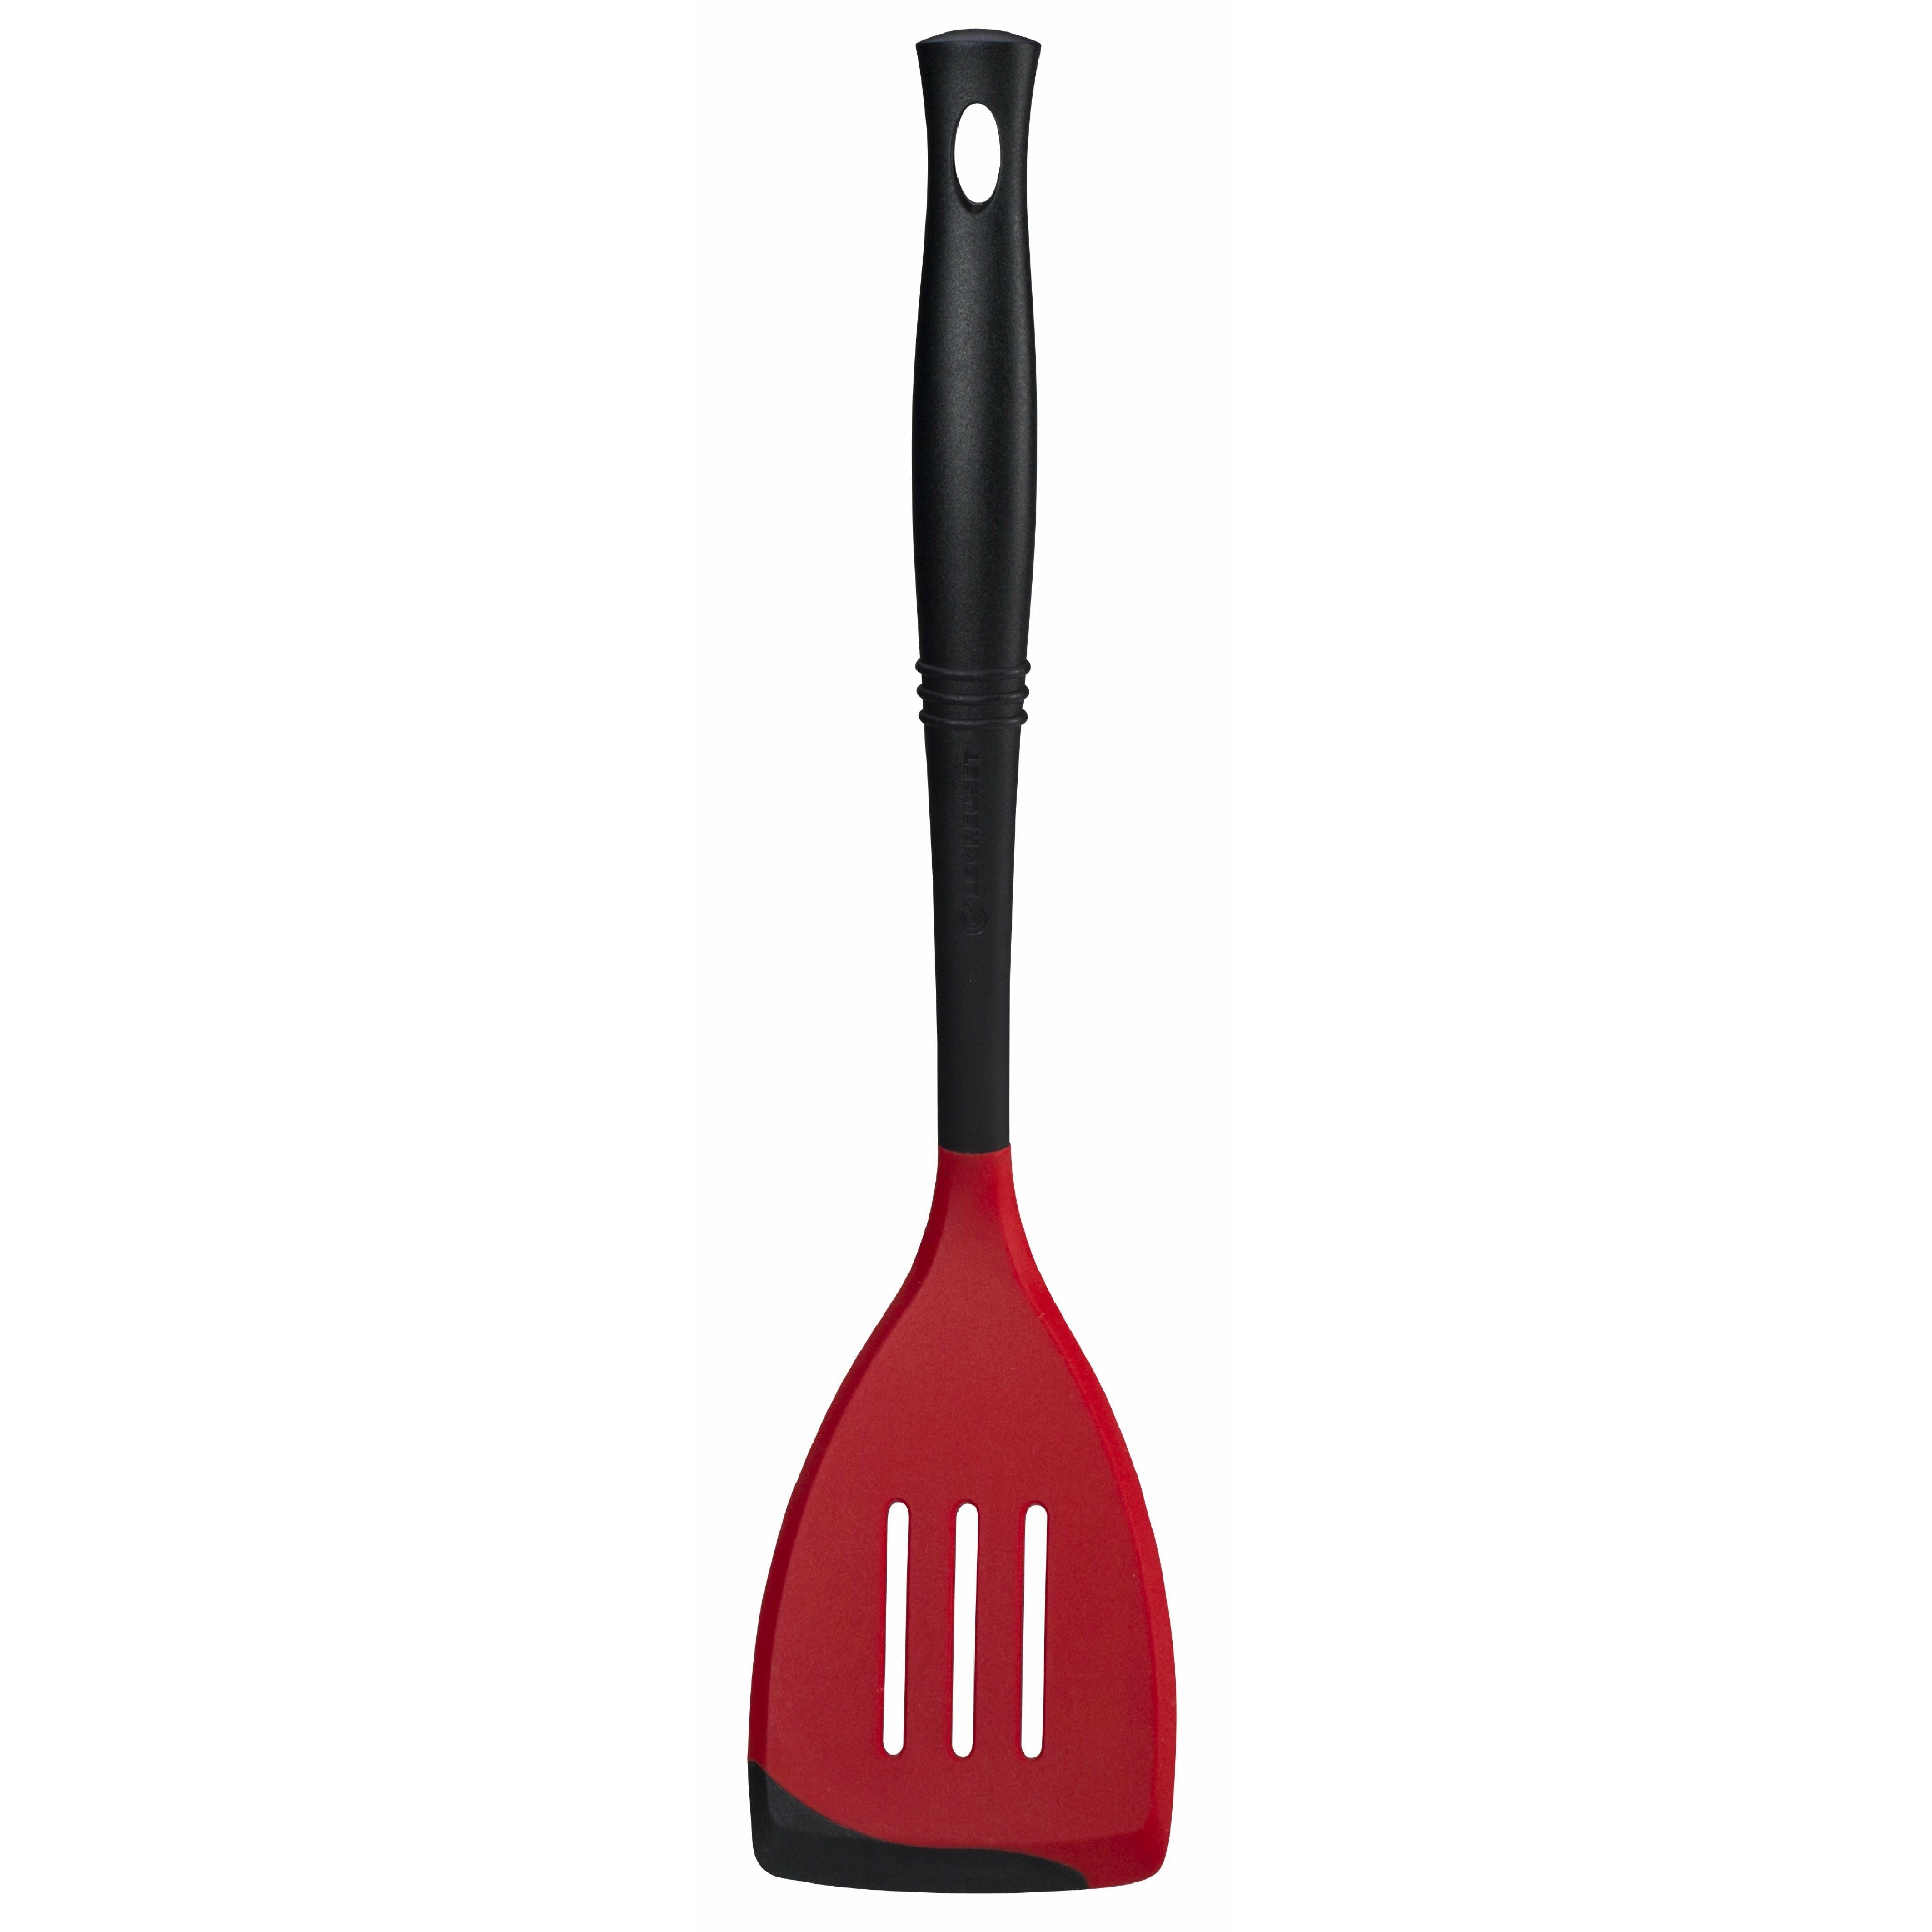 Le Creuset Edge premium spatule, rouge cerise